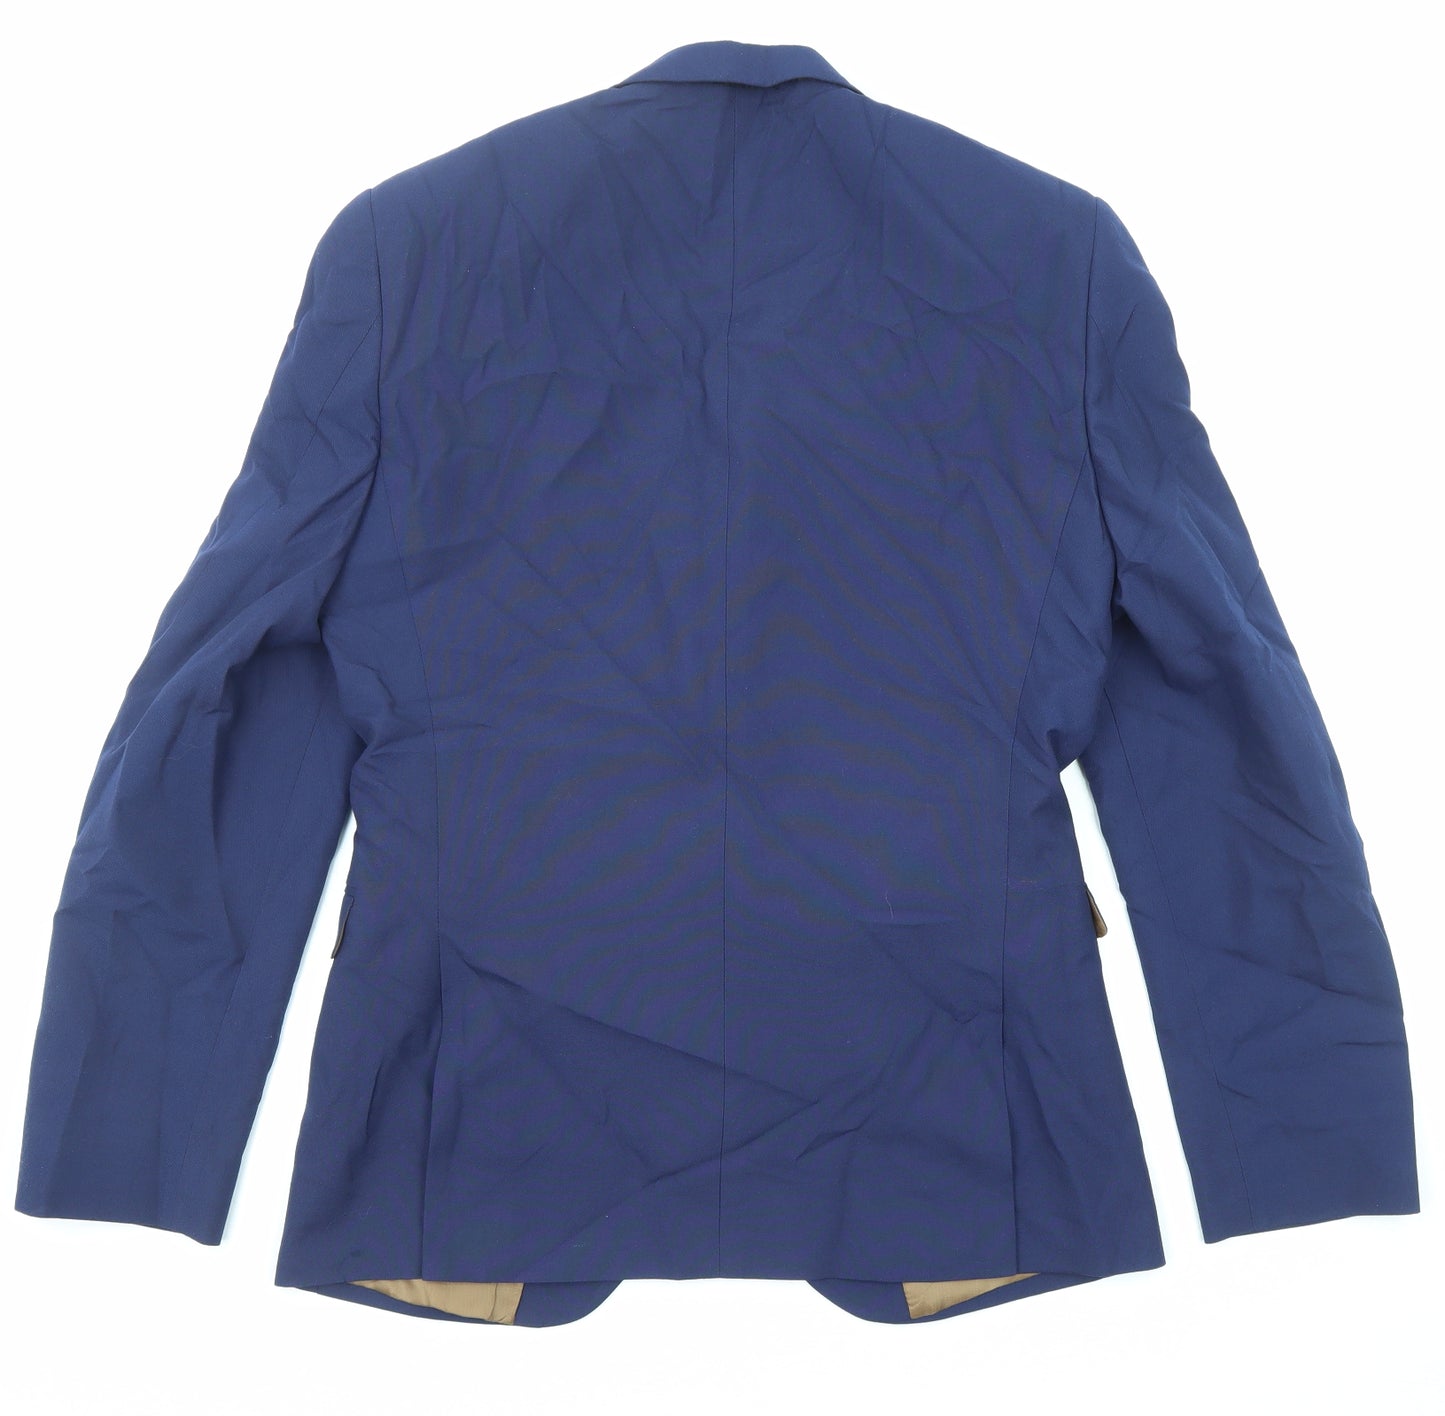 NEXT Mens Blue Polyester Jacket Suit Jacket Size 38 Regular